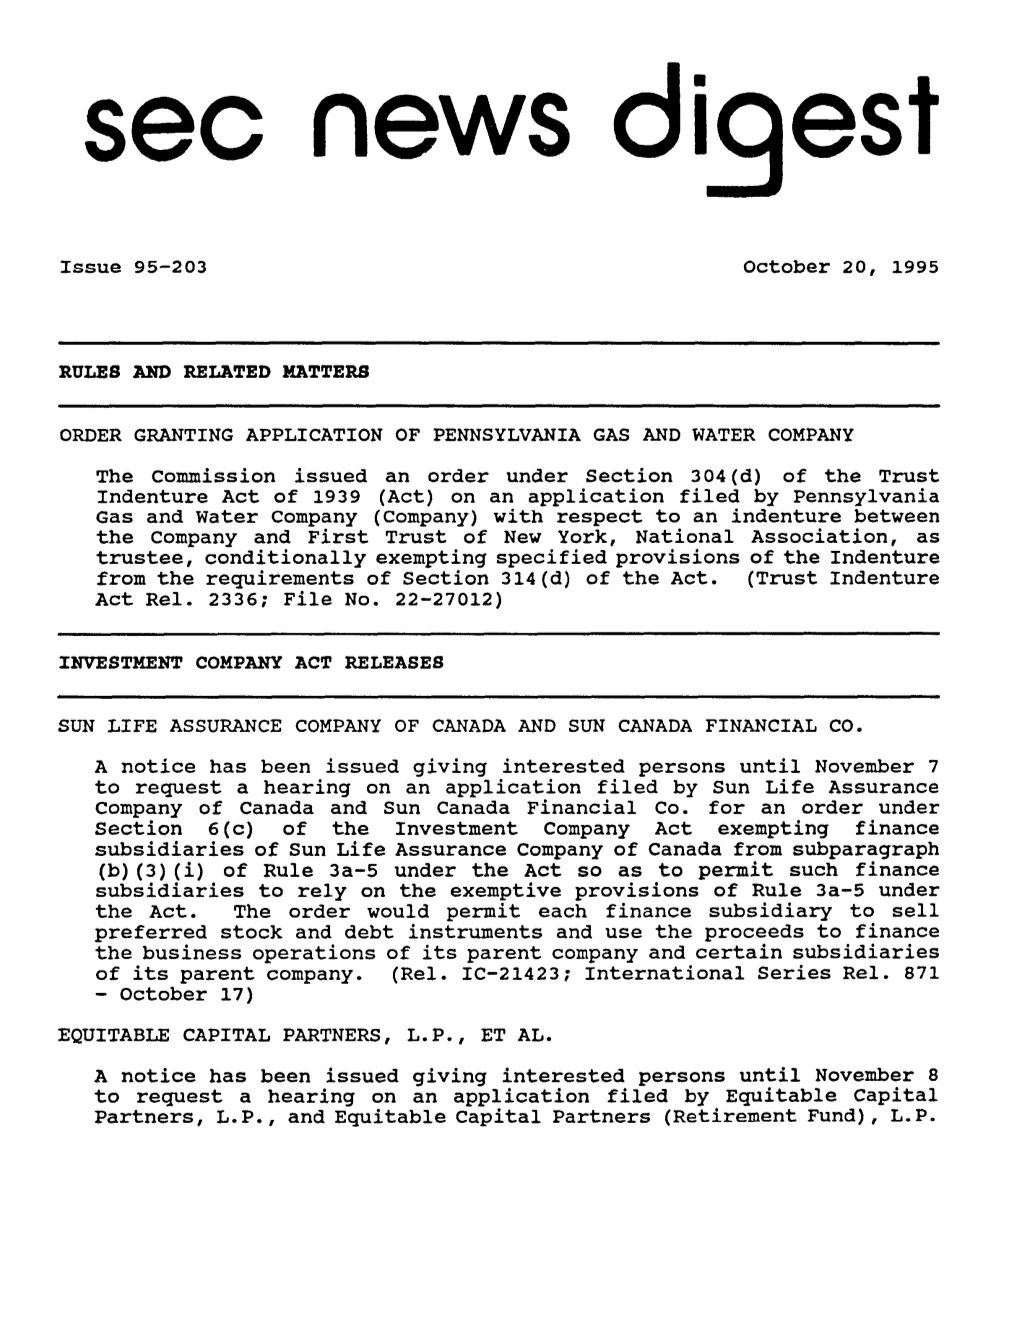 SEC News Digest, 10-20-1995